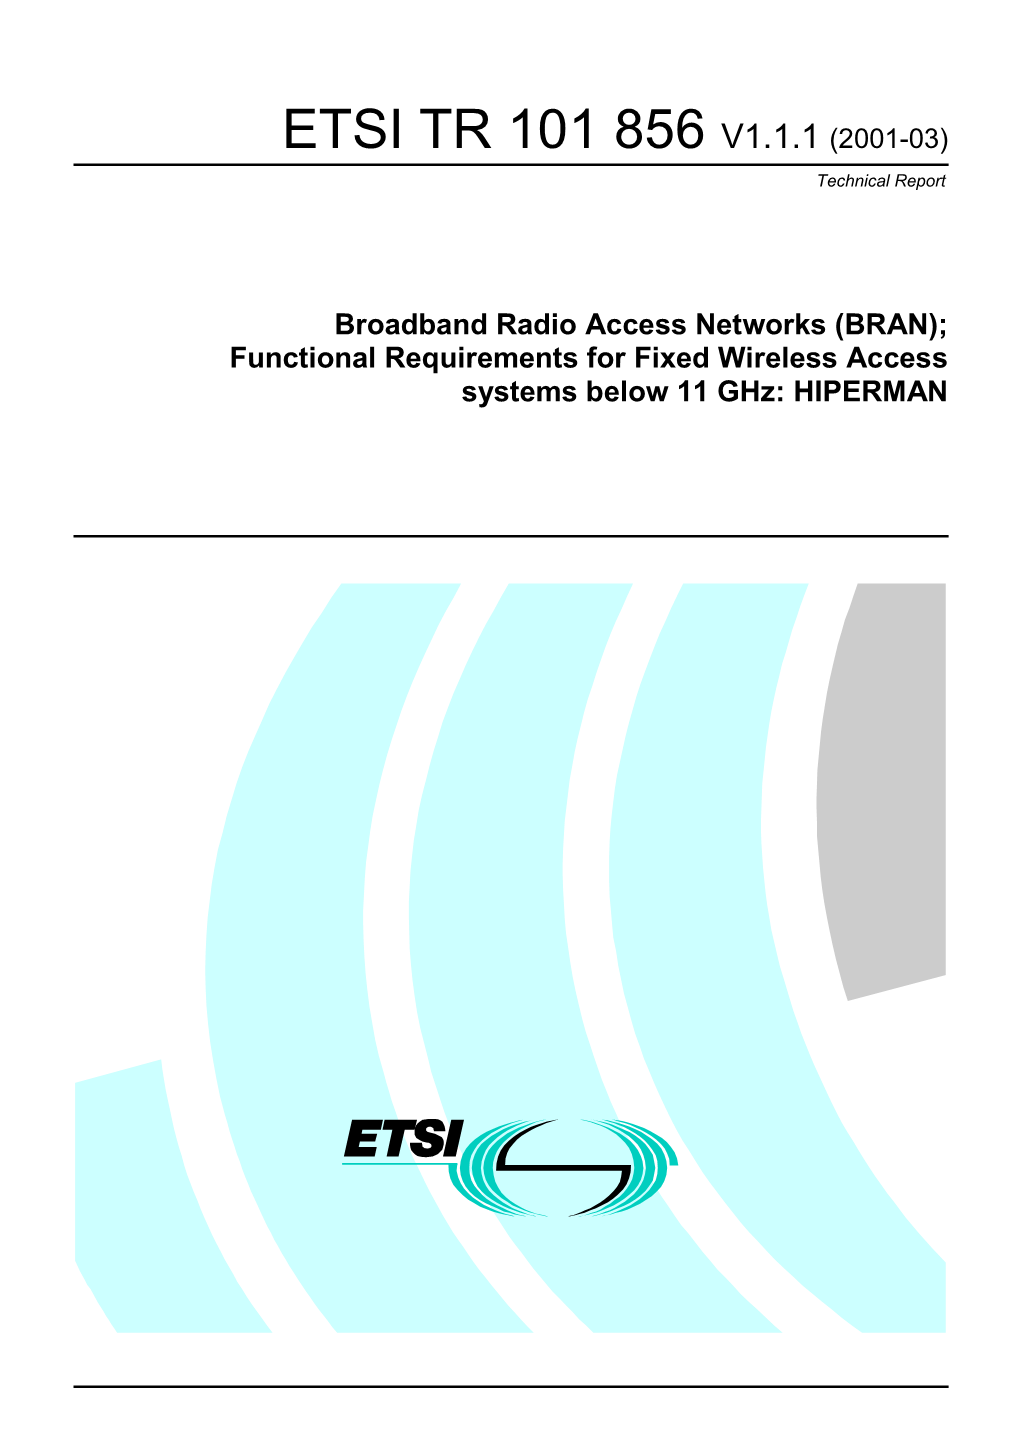 TR 101 856 V1.1.1 (2001-03) Technical Report